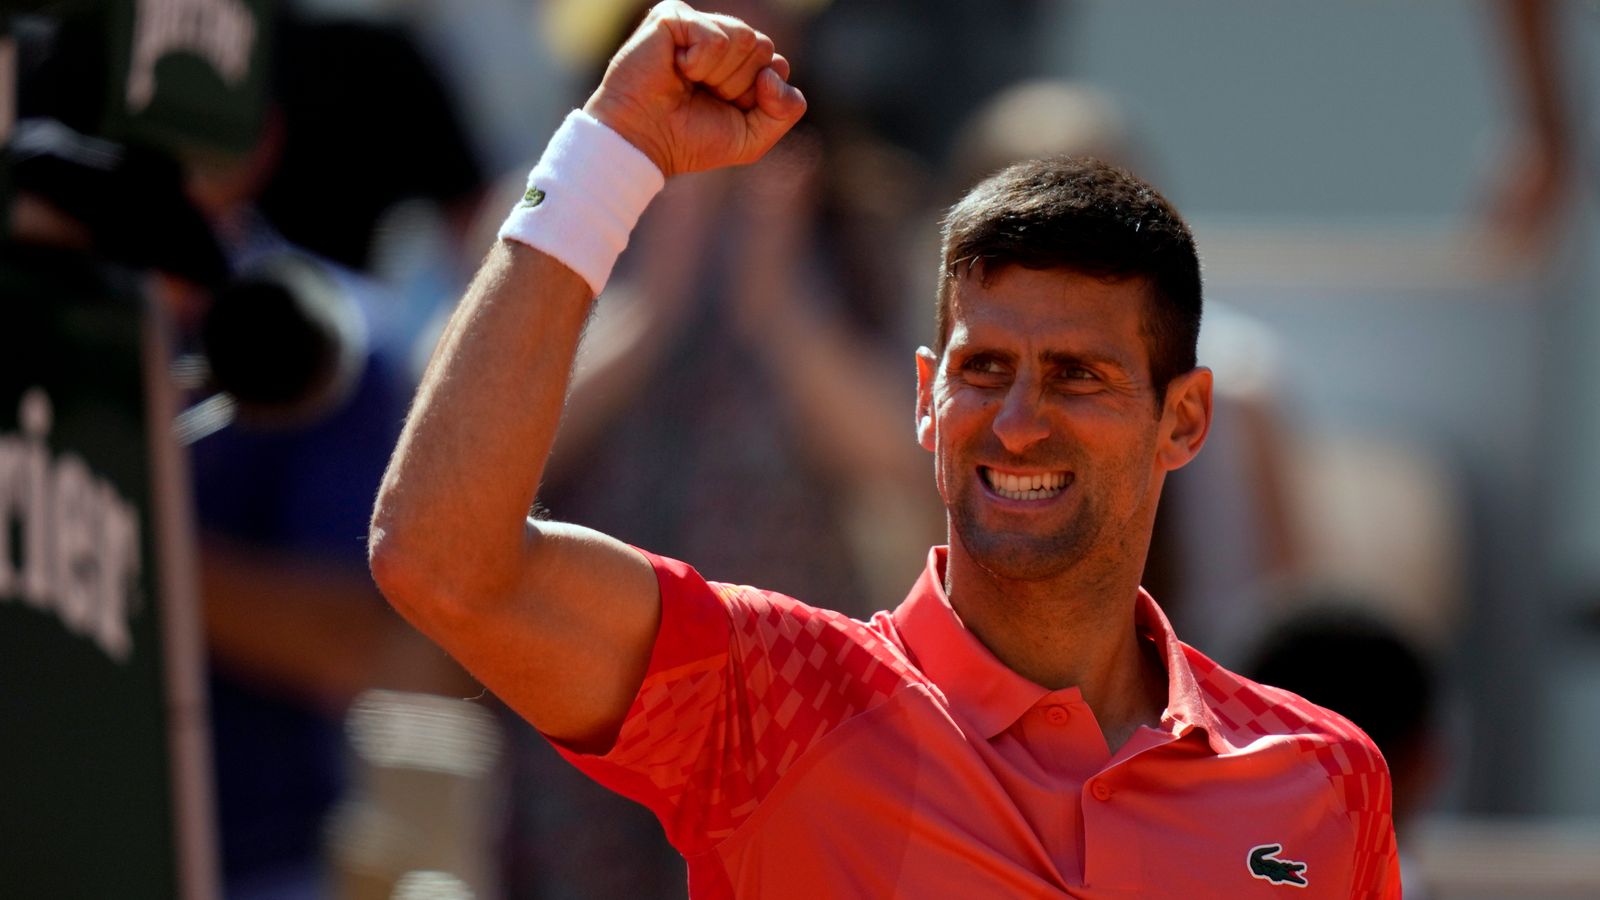 French Open Novak Djokovic through to quarter-finals where Karen Khachanov awaits Tennis News Sky Sports